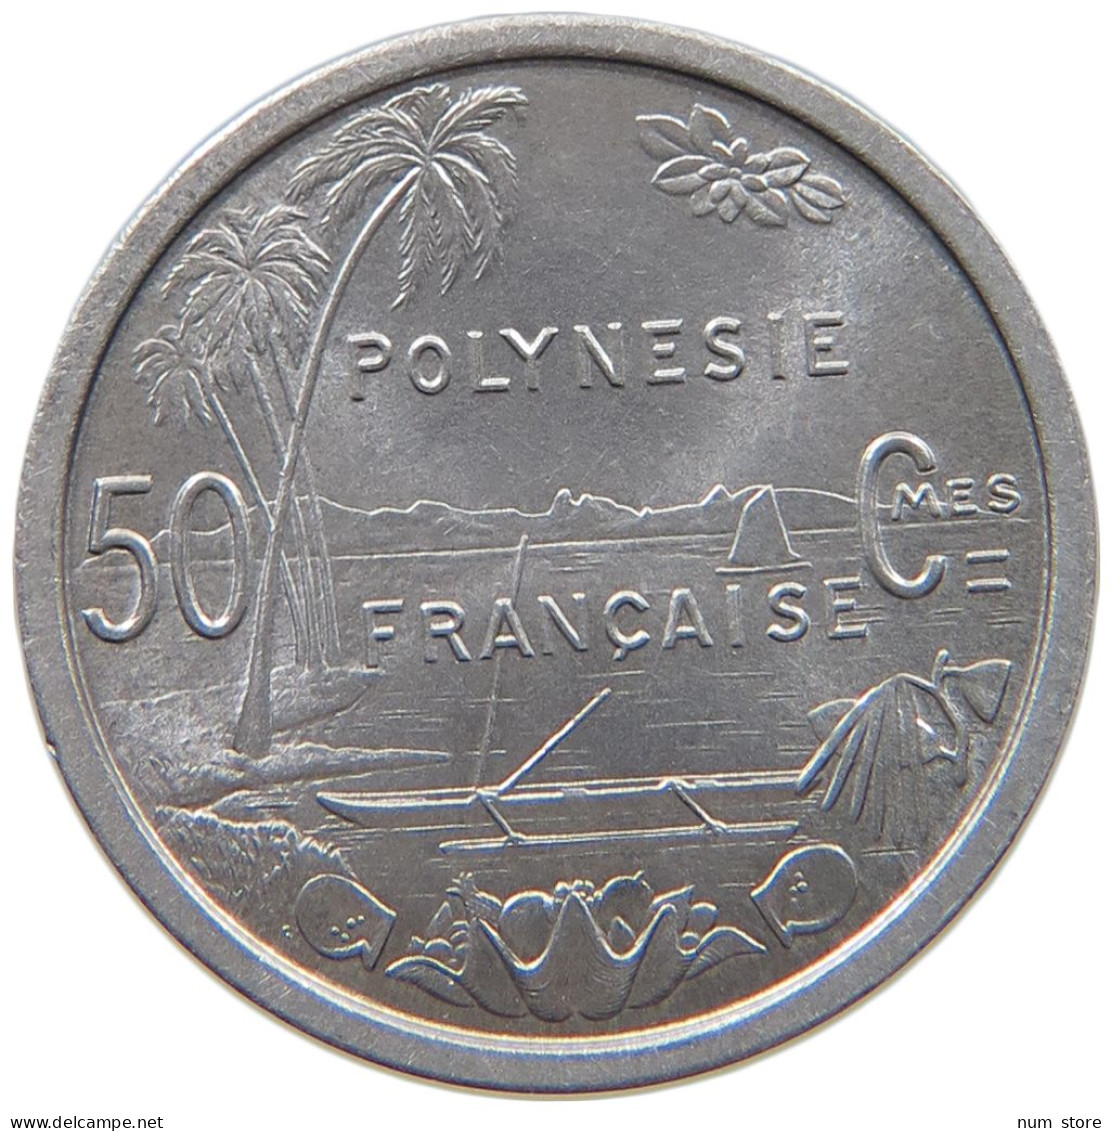 POLYNESIA 50 CENTIMES 1965  #c040 0749 - Polinesia Francesa